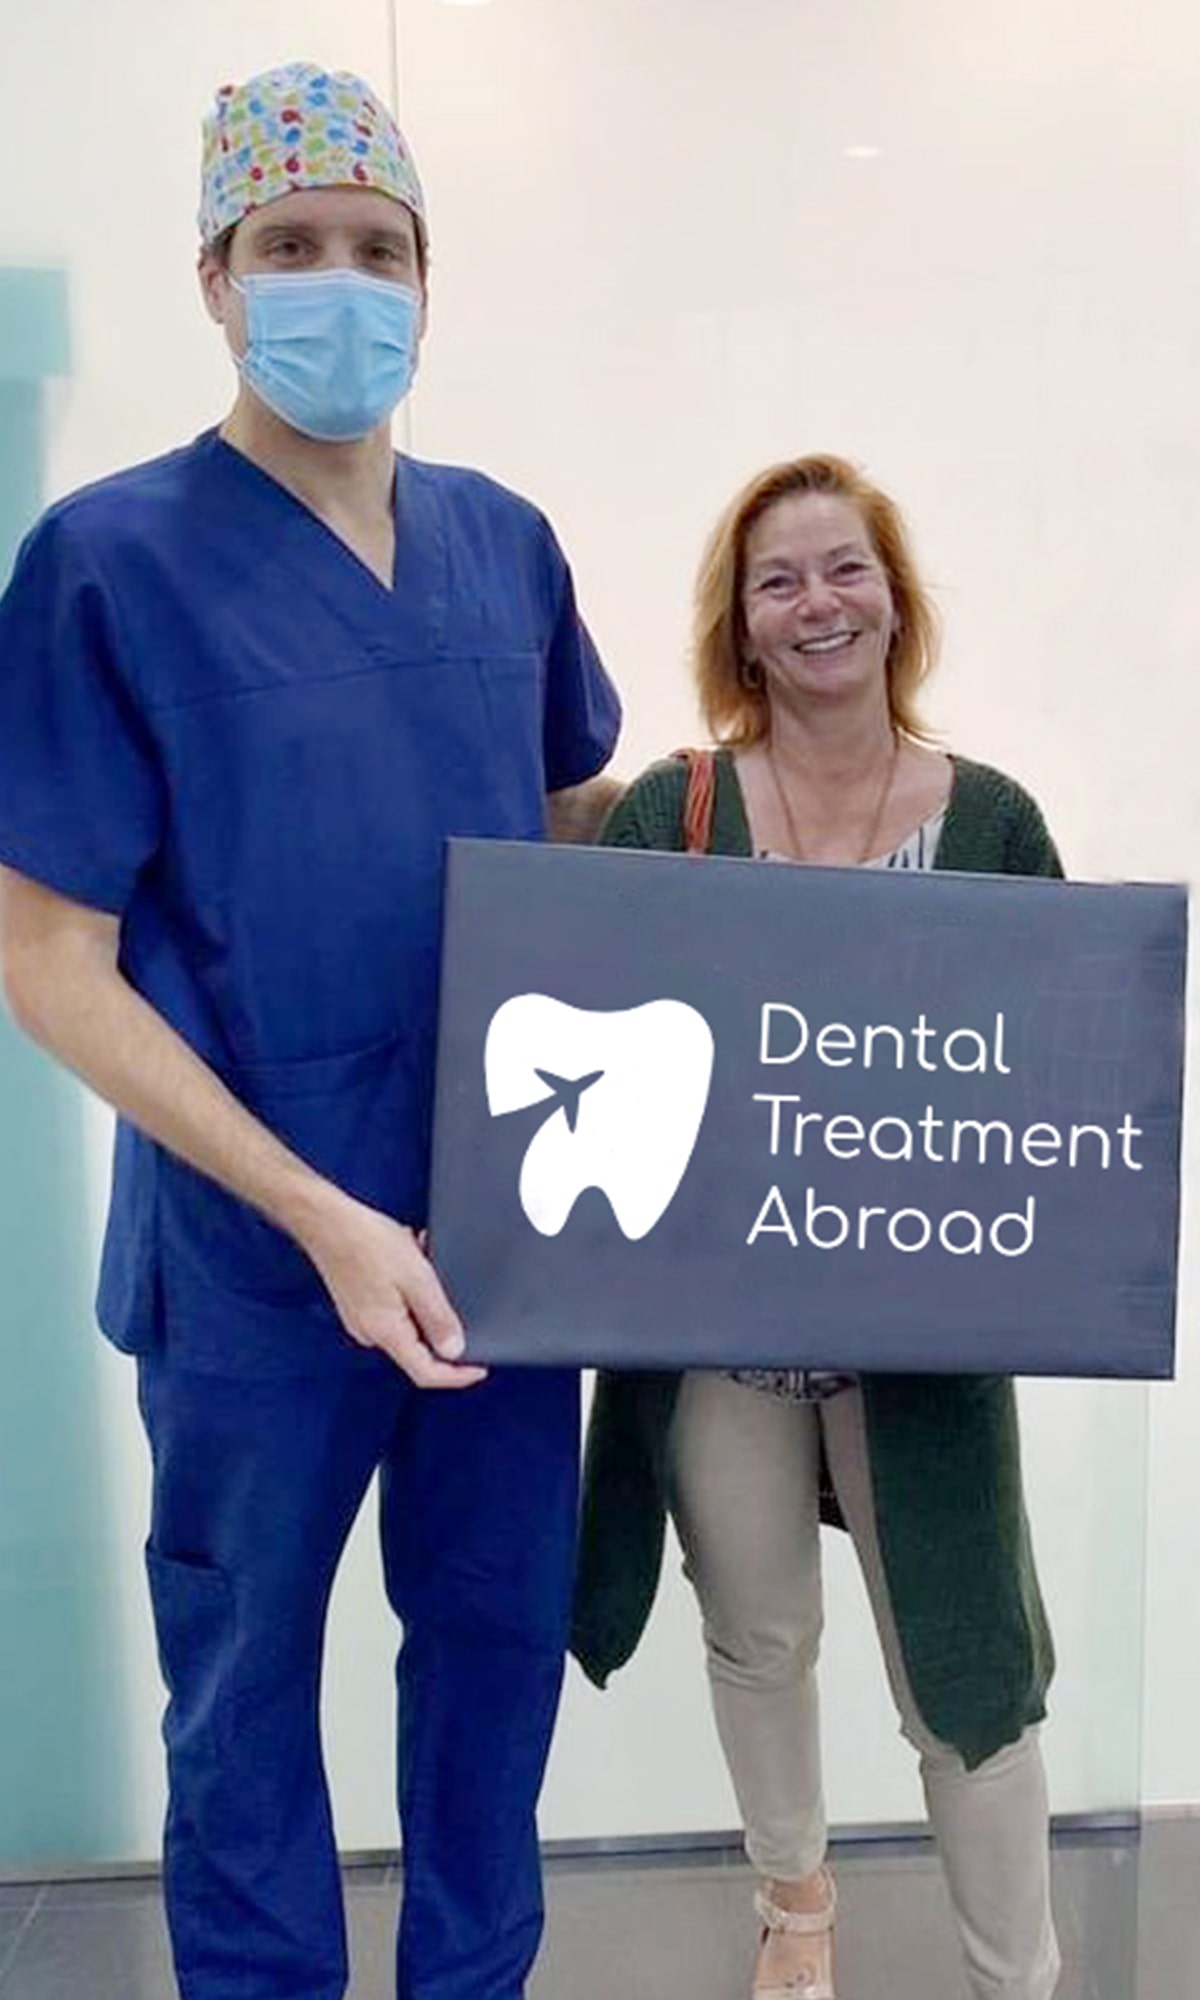 Dental Treatment abroad